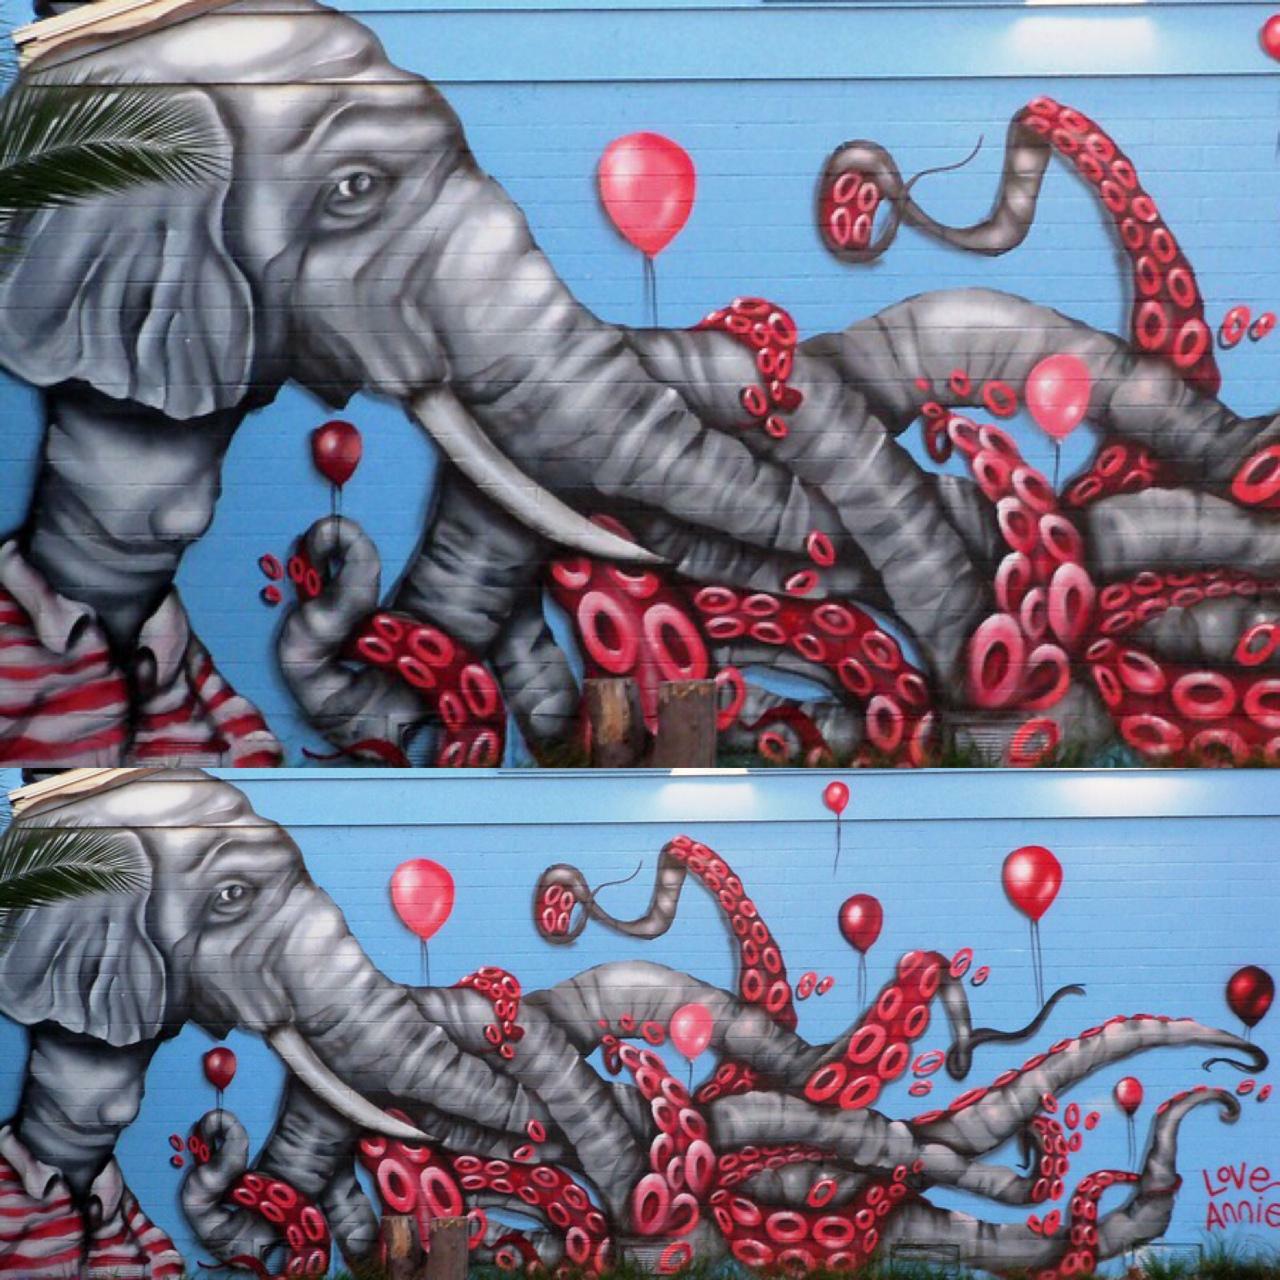 By anniepreece in Cali
#streetart #urbanart #graffiti #mural http://t.co/Xq2bo8R2U7